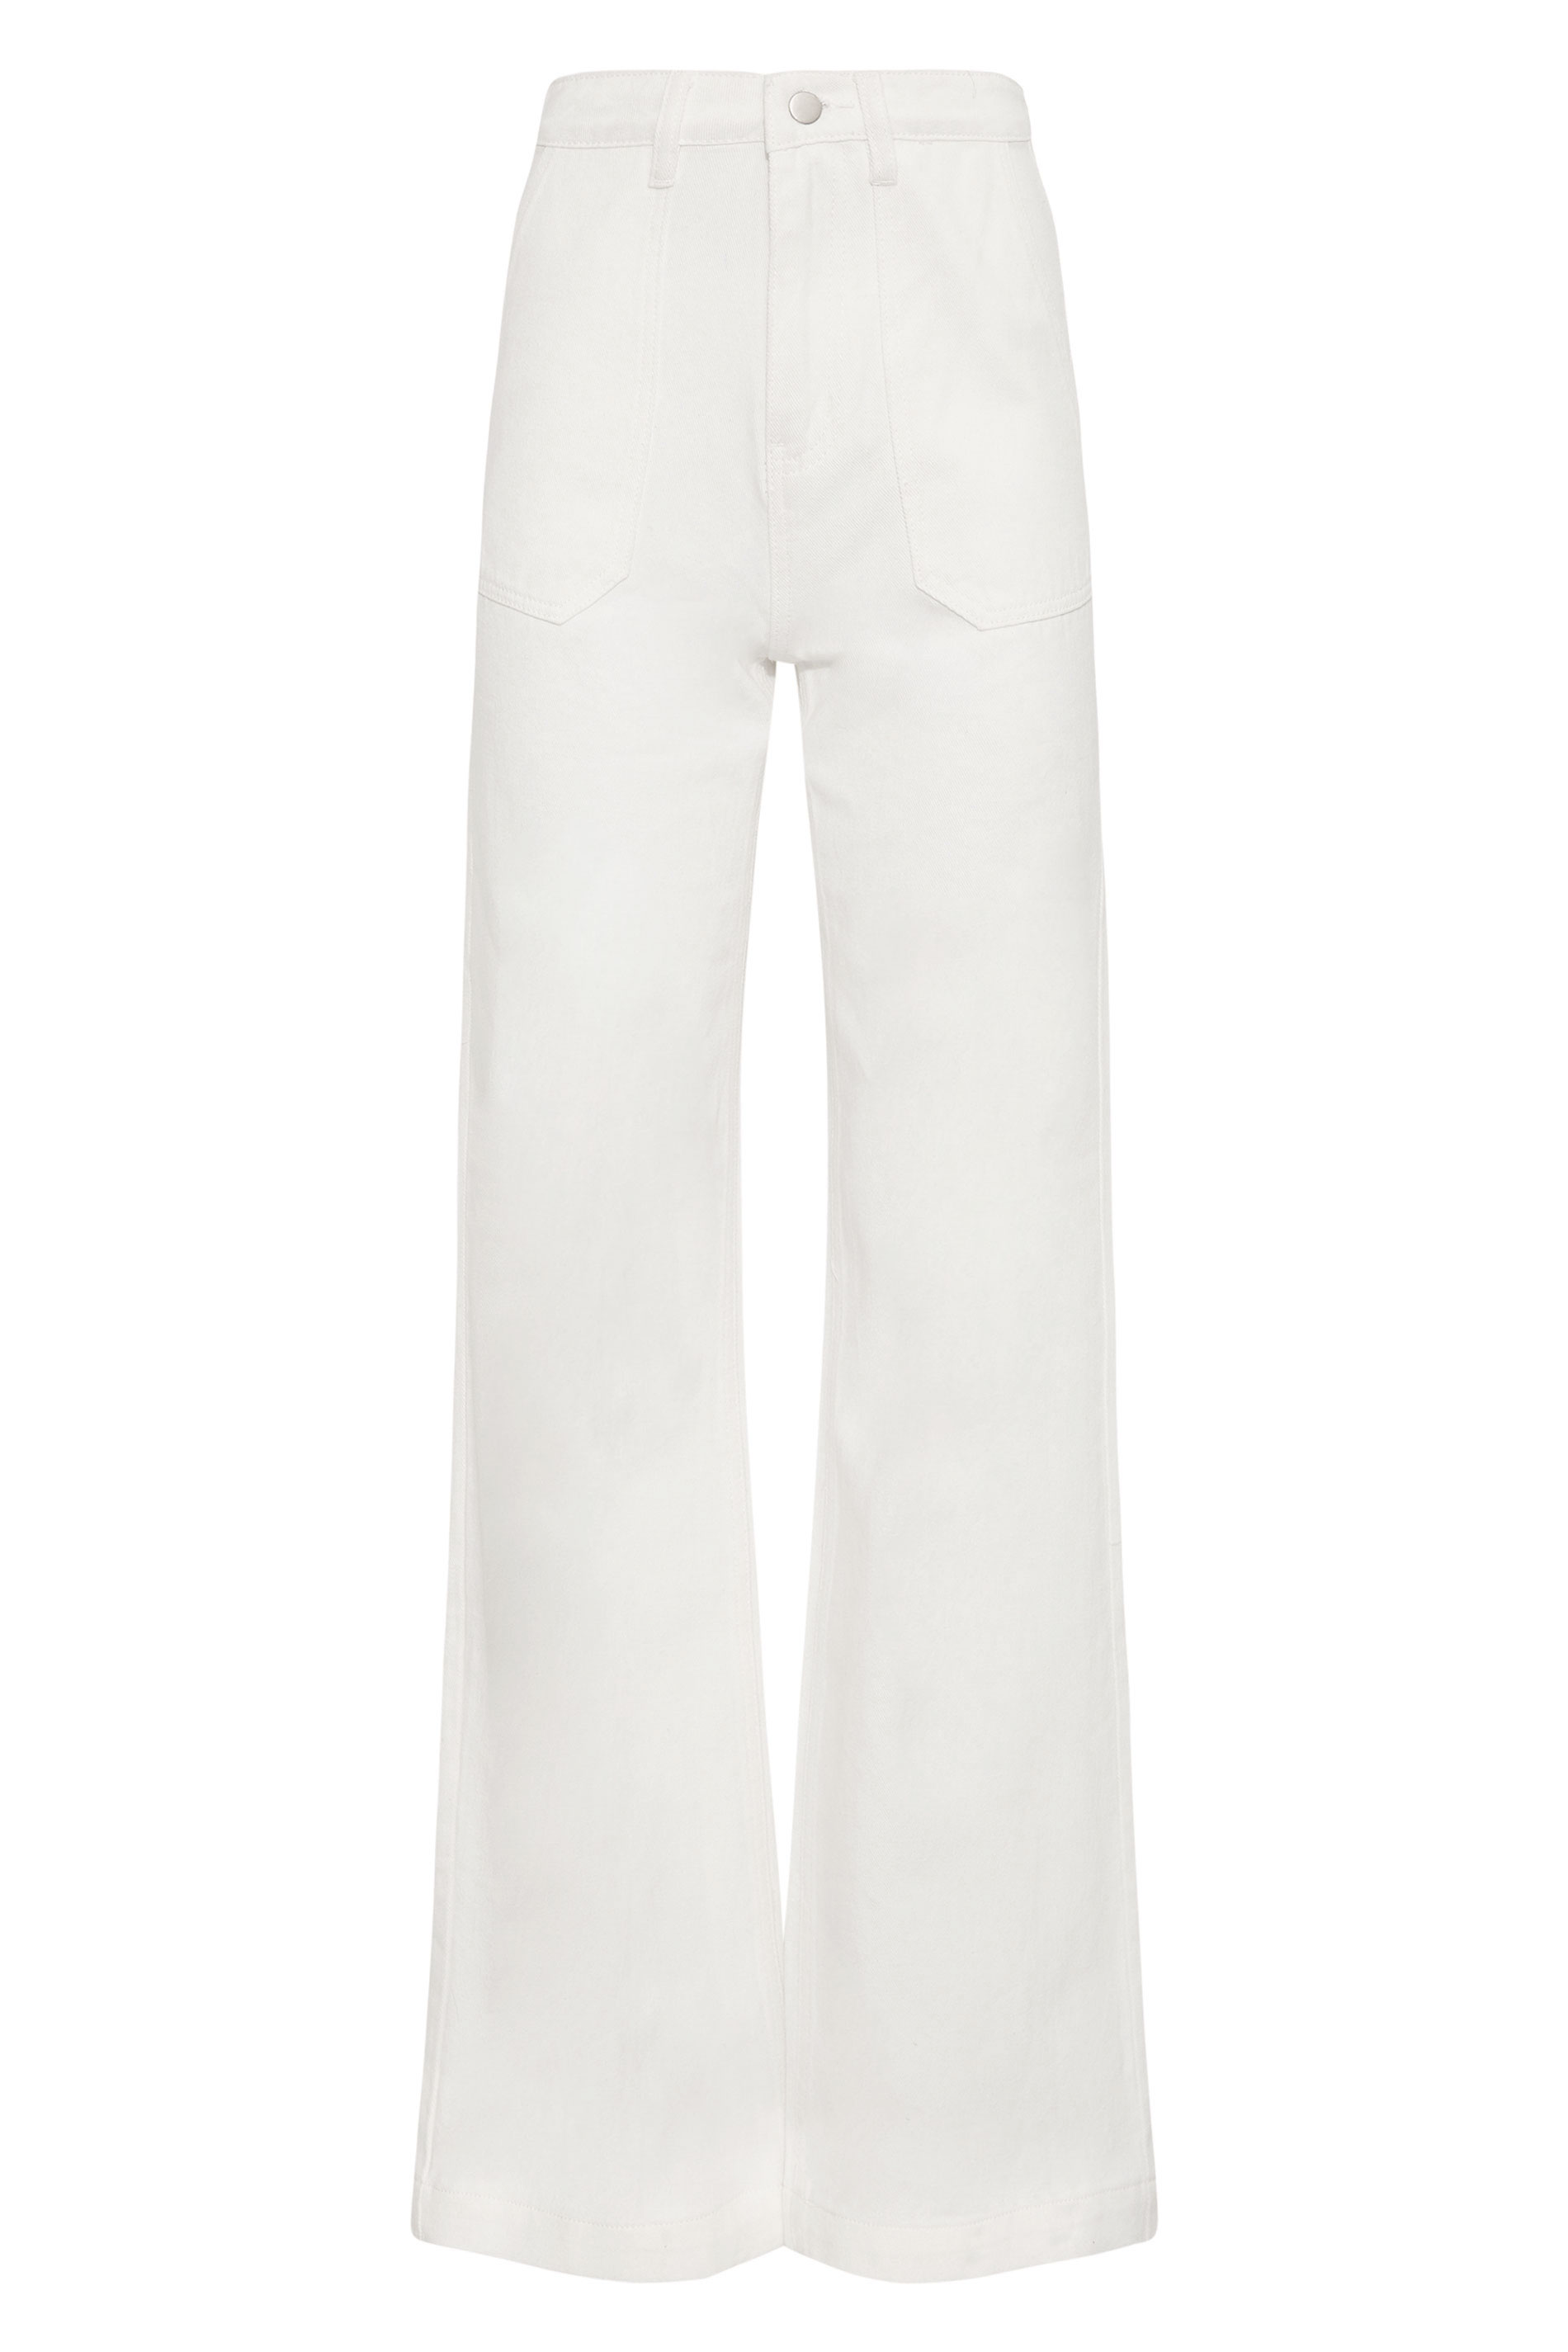 LTS Tall Women's White Cotton Twill Wide Leg Trousers | Long Tall Sally